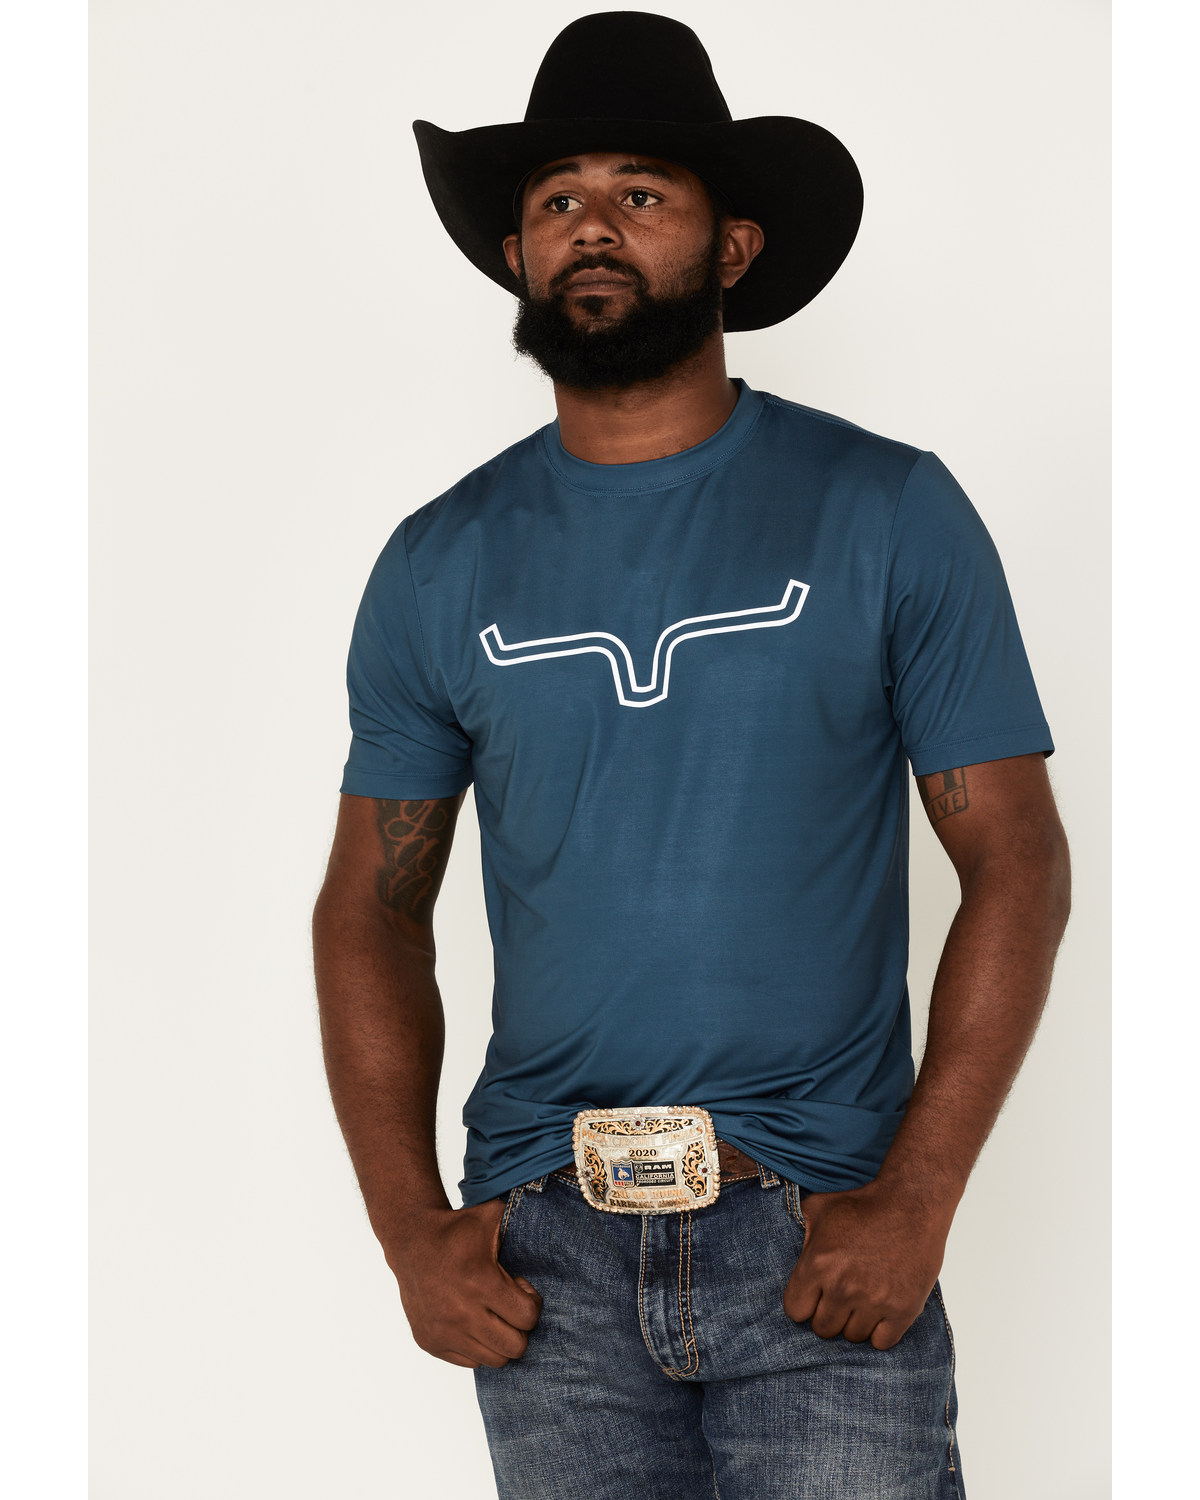 Kimes Ranch Men's Outlier Tech Horns Graphic Performance T-Shirt